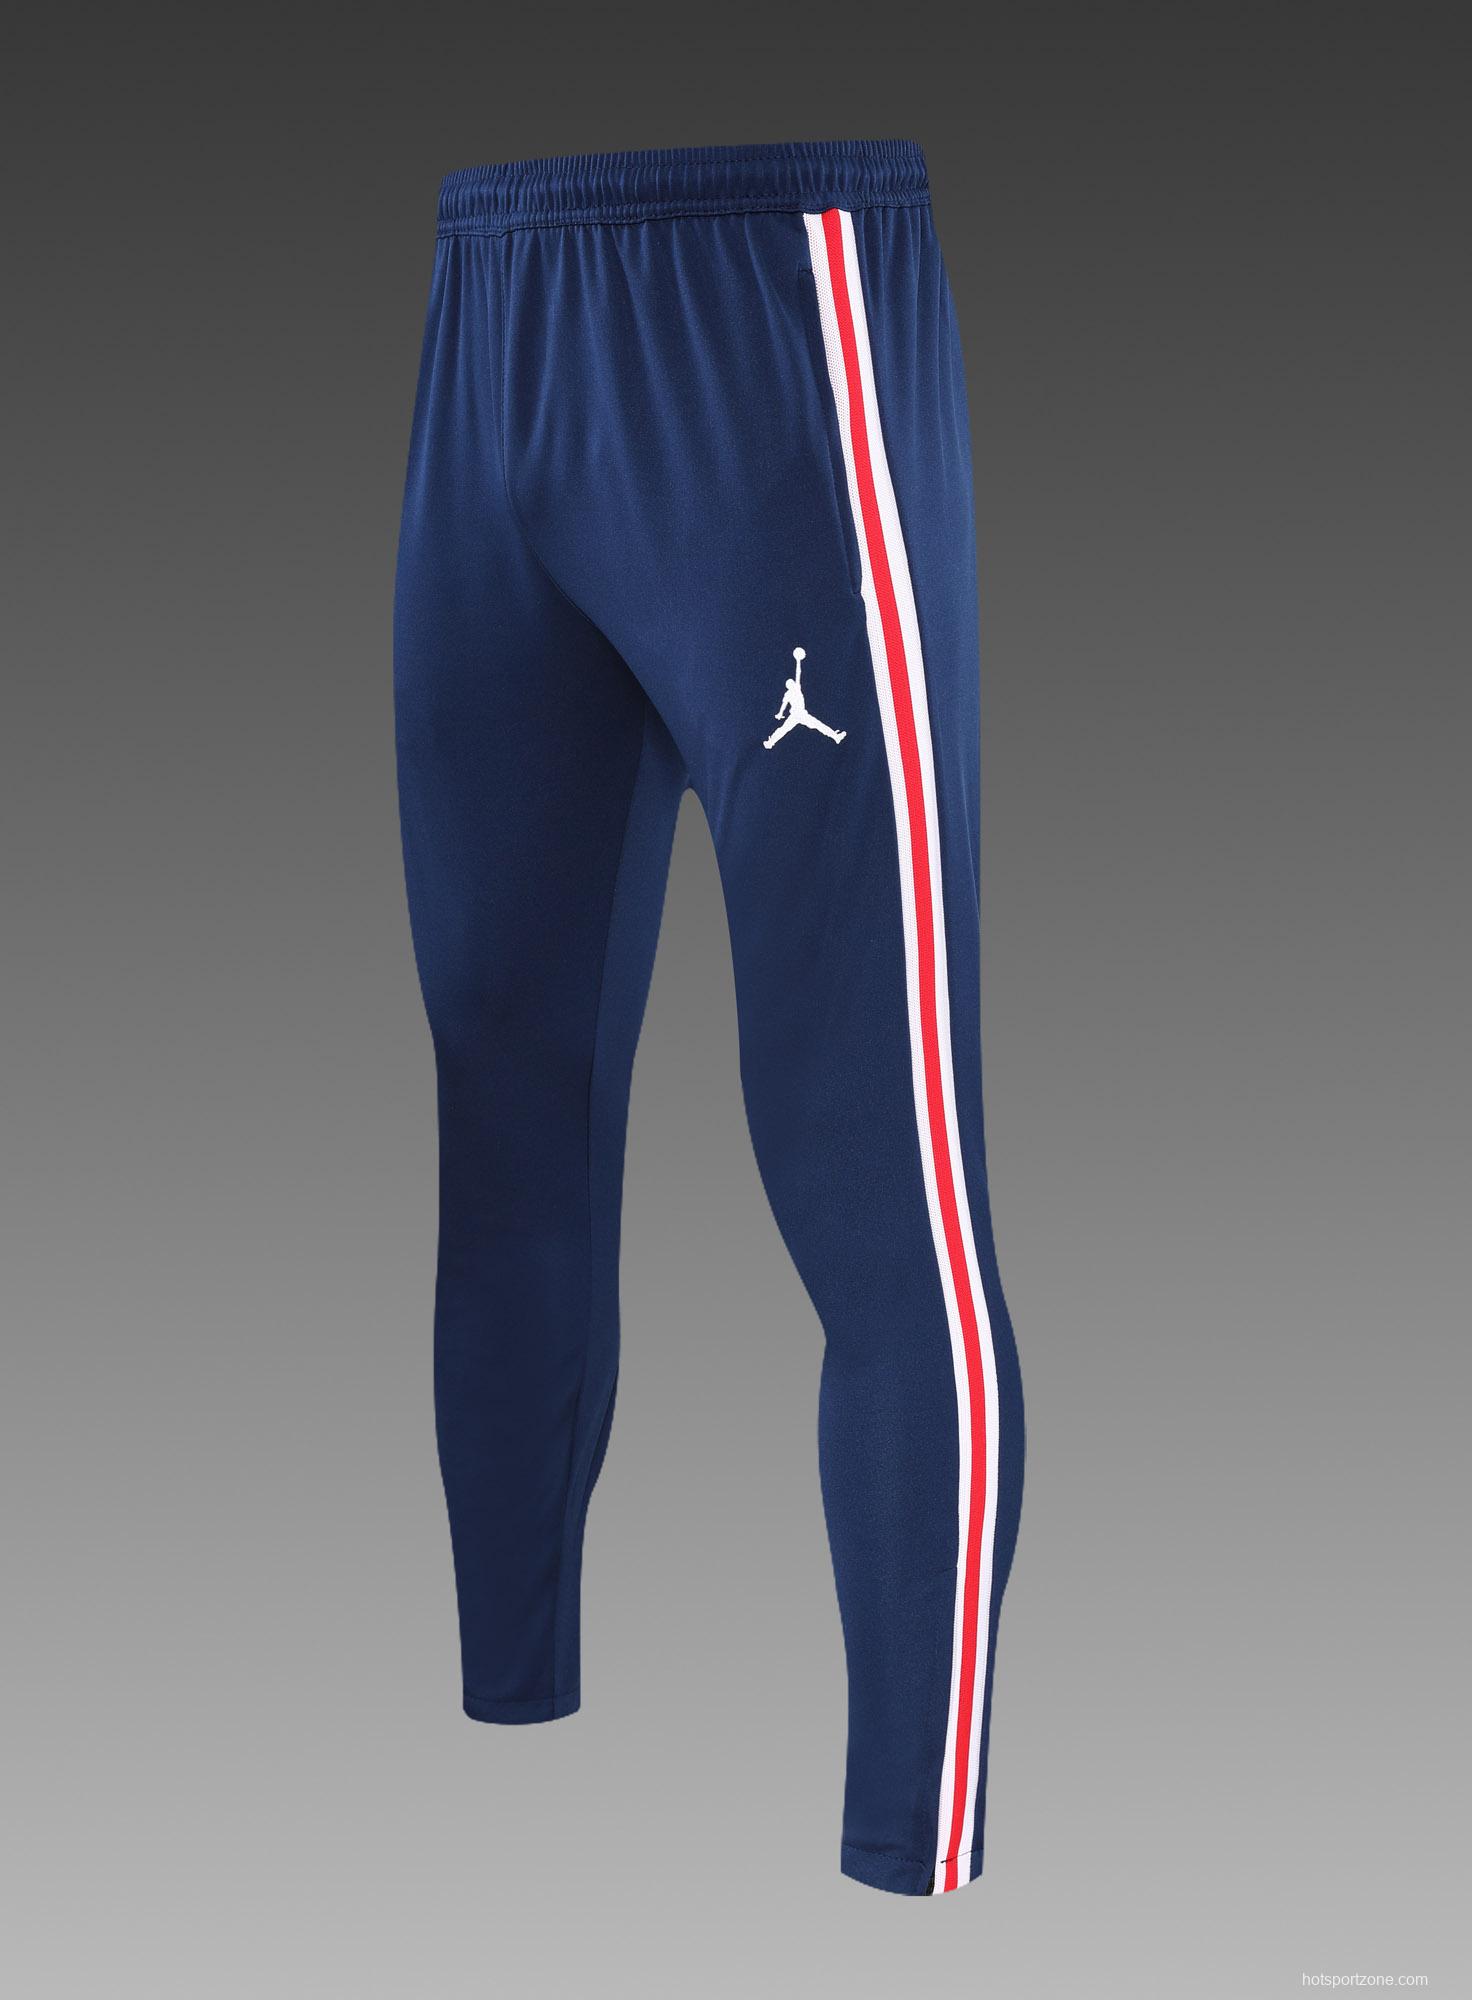 PSG X Jordan POLO kit royal blue (not sold separately)